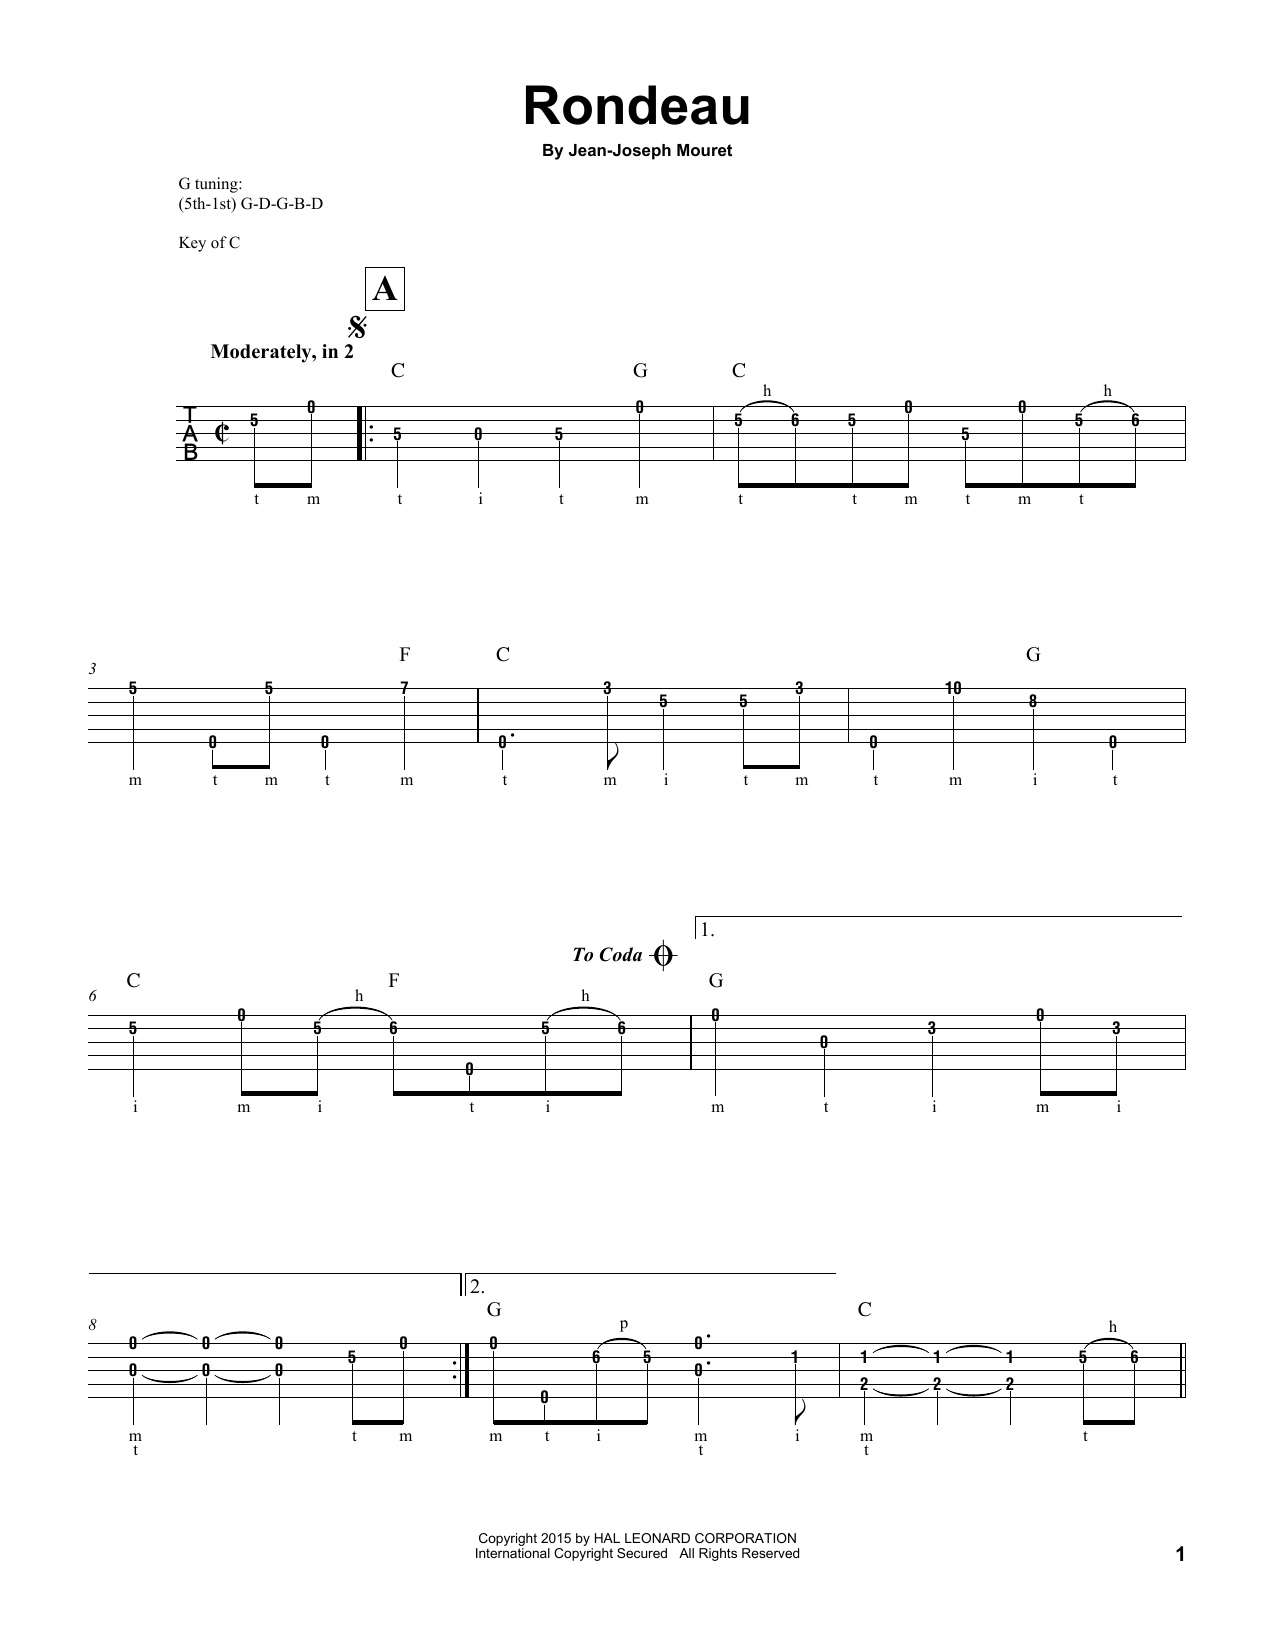 Jean-Joseph Mouret Fanfare Rondeau Sheet Music Notes & Chords for Cello - Download or Print PDF